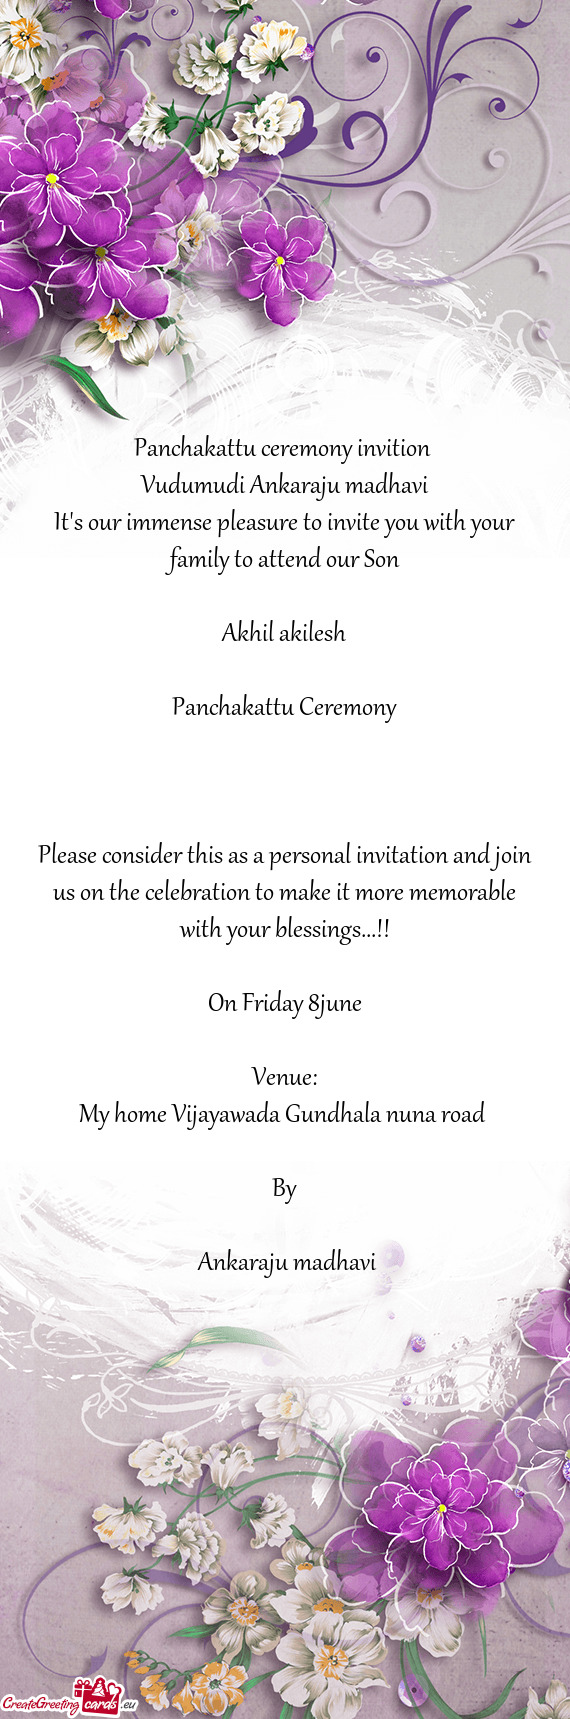 Panchakattu ceremony invition